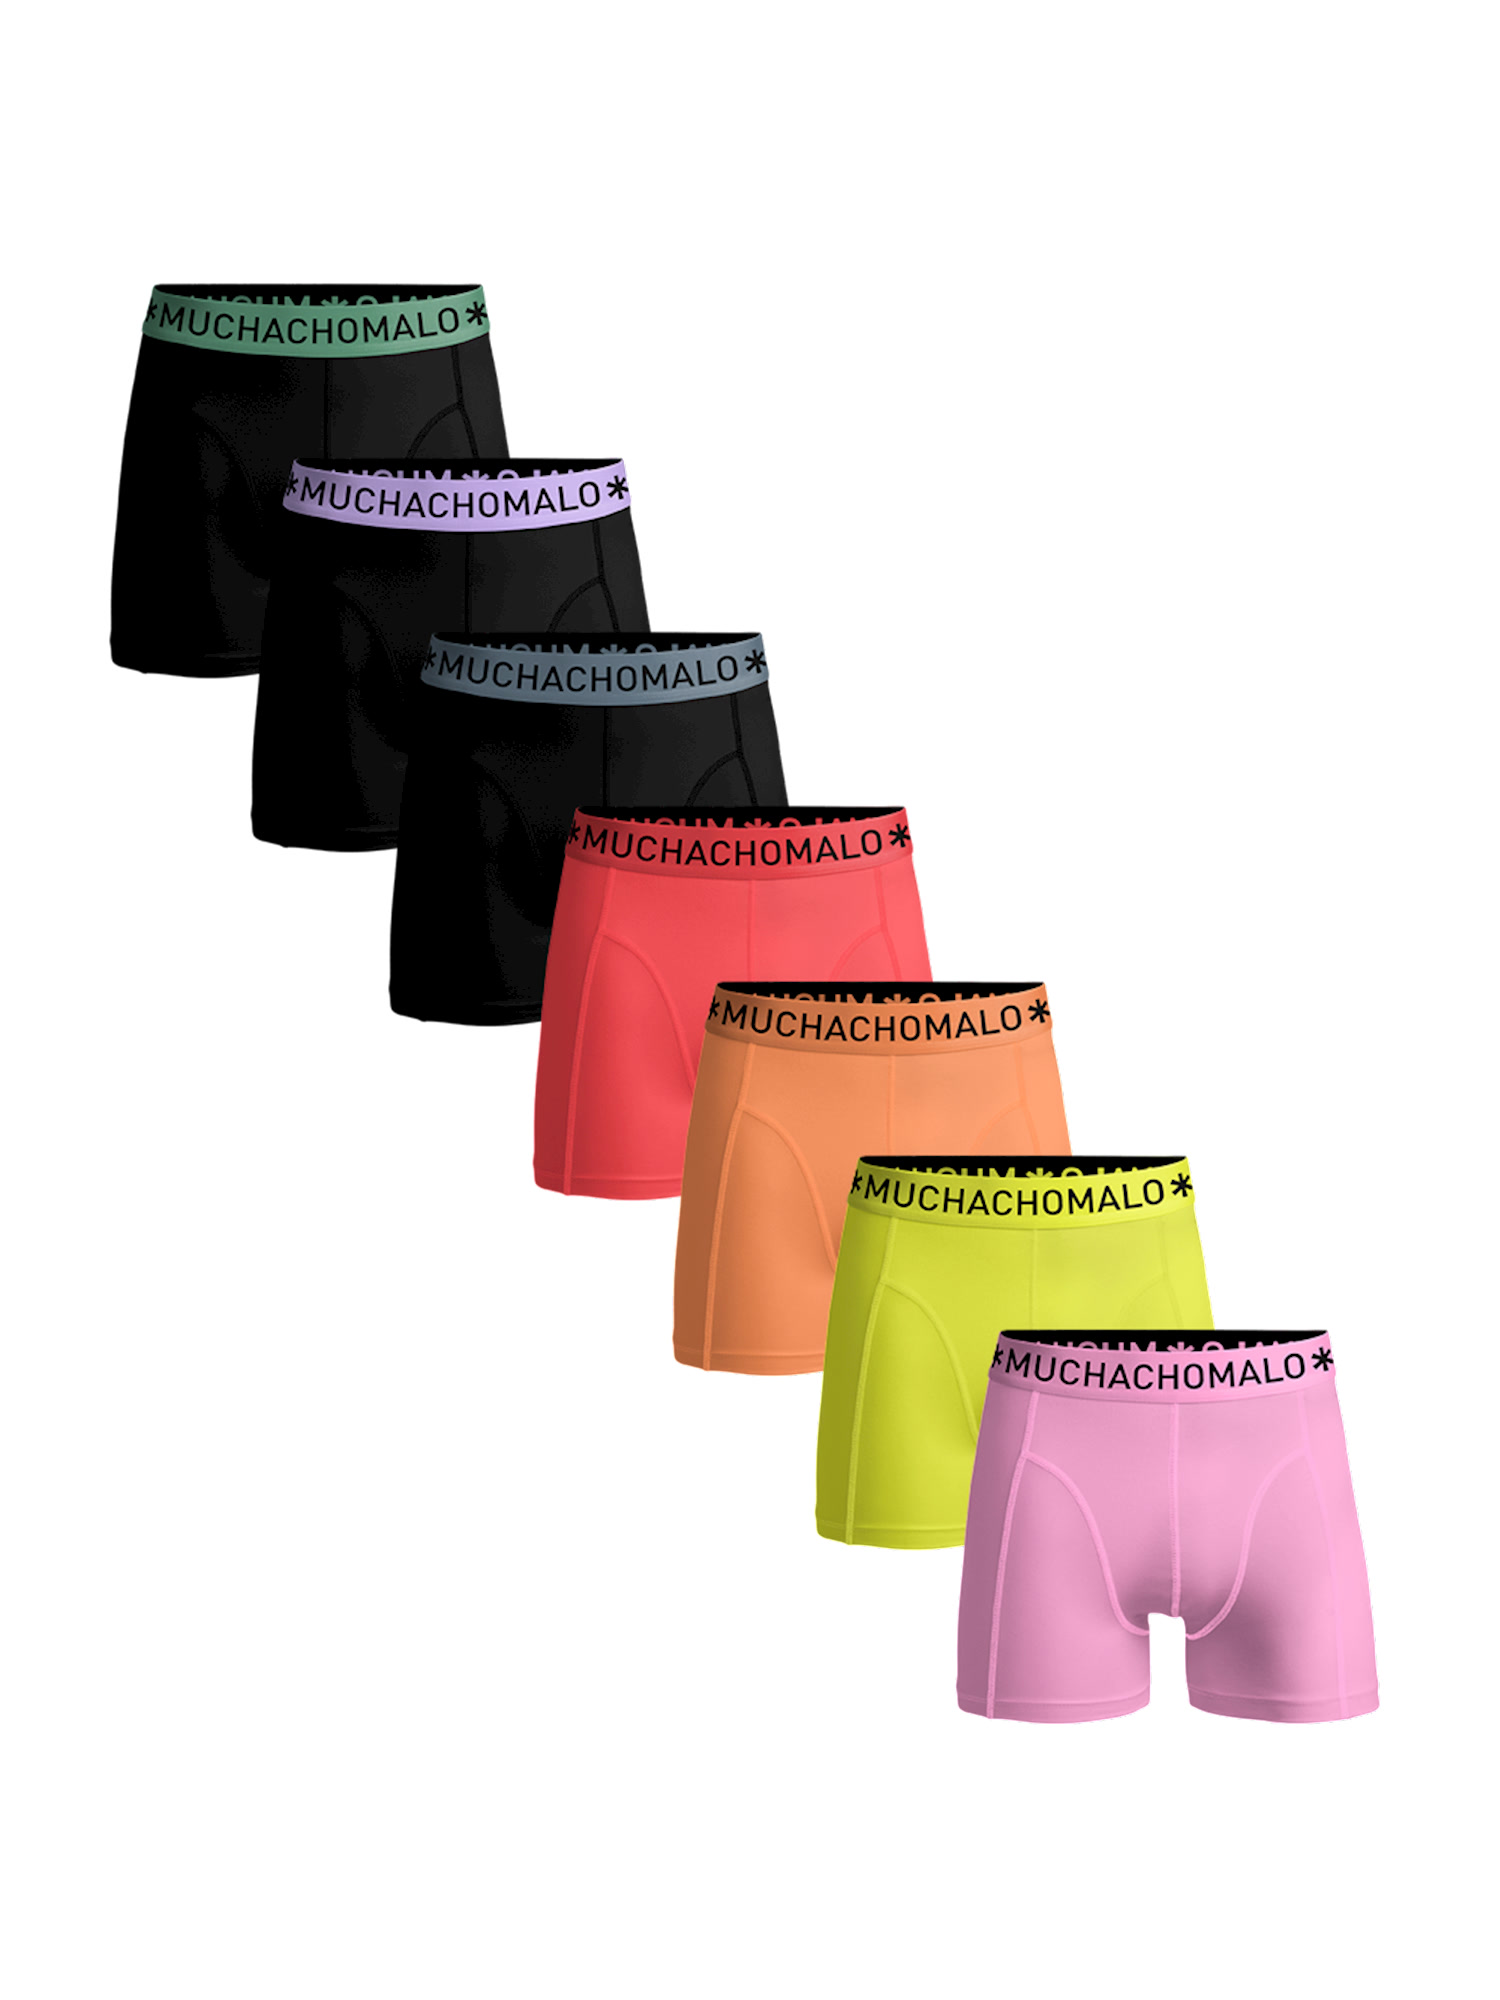 Боксеры Muchachomalo 7er-Set: Boxershorts, цвет Black/Black/Black/Pink/Orange/Yellow/Pink armada black yellow